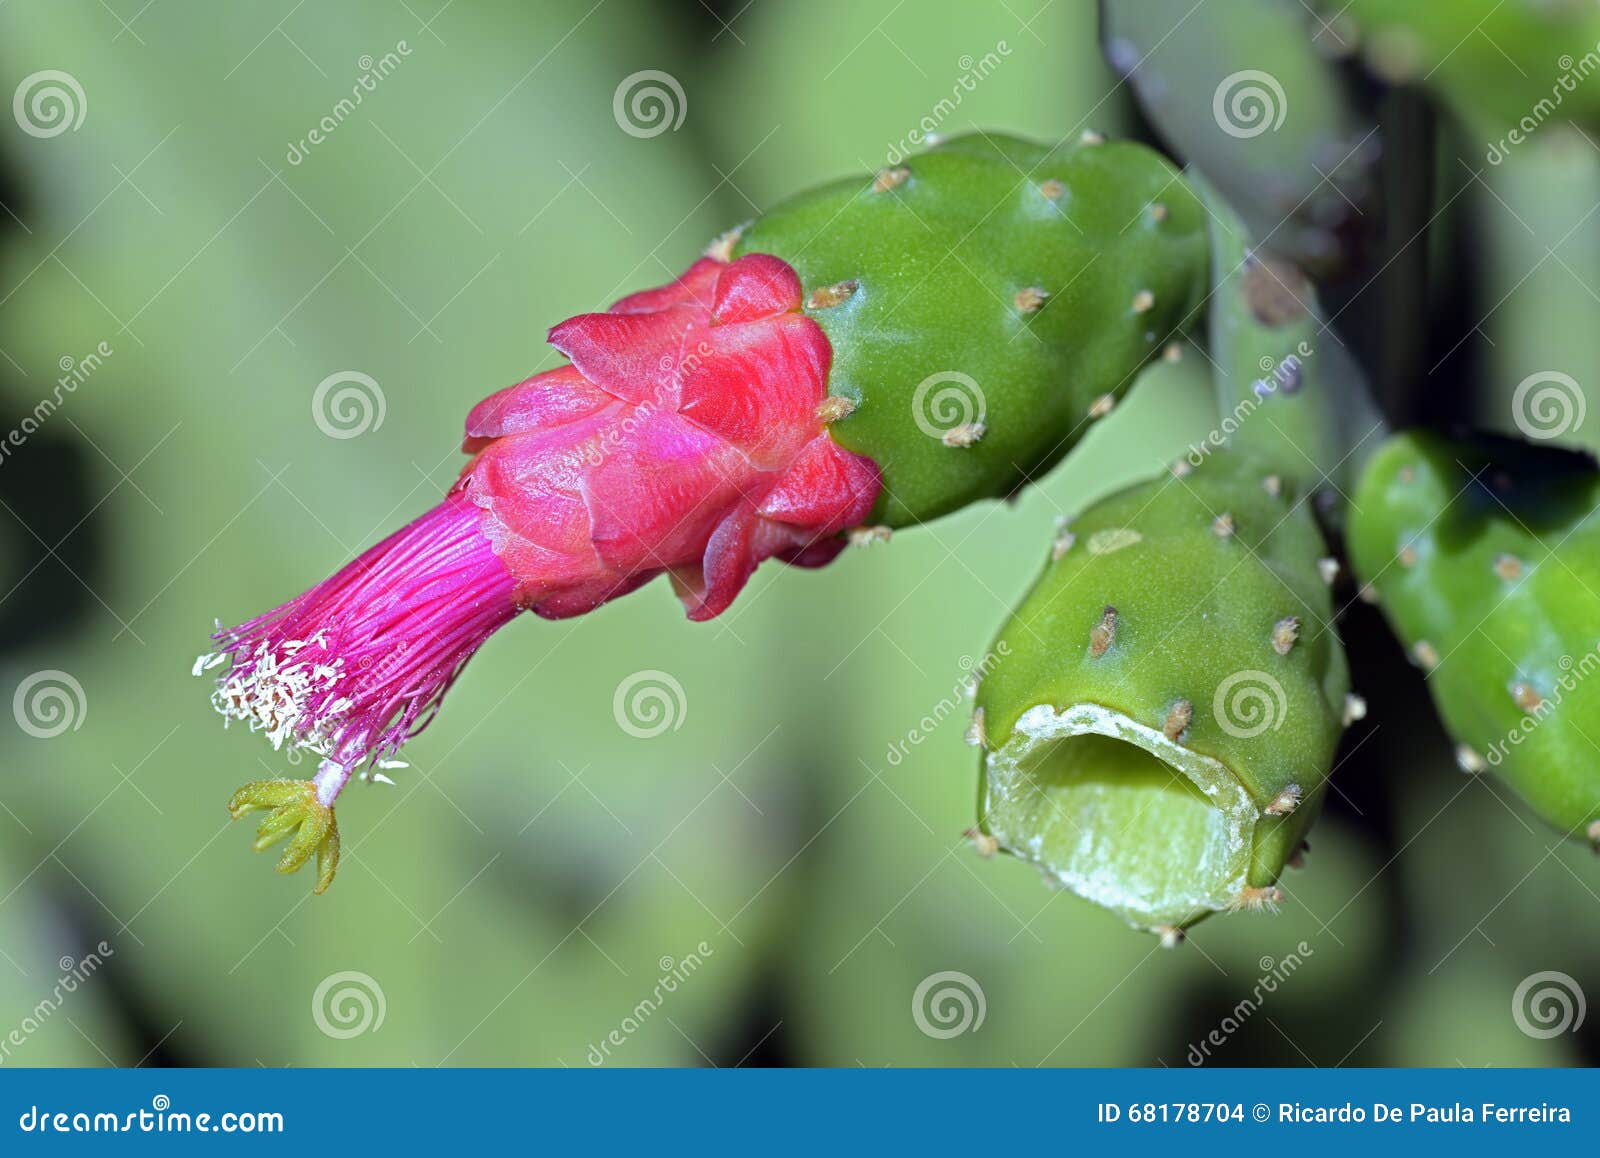 flower of the cactus opuntia cochenillifera